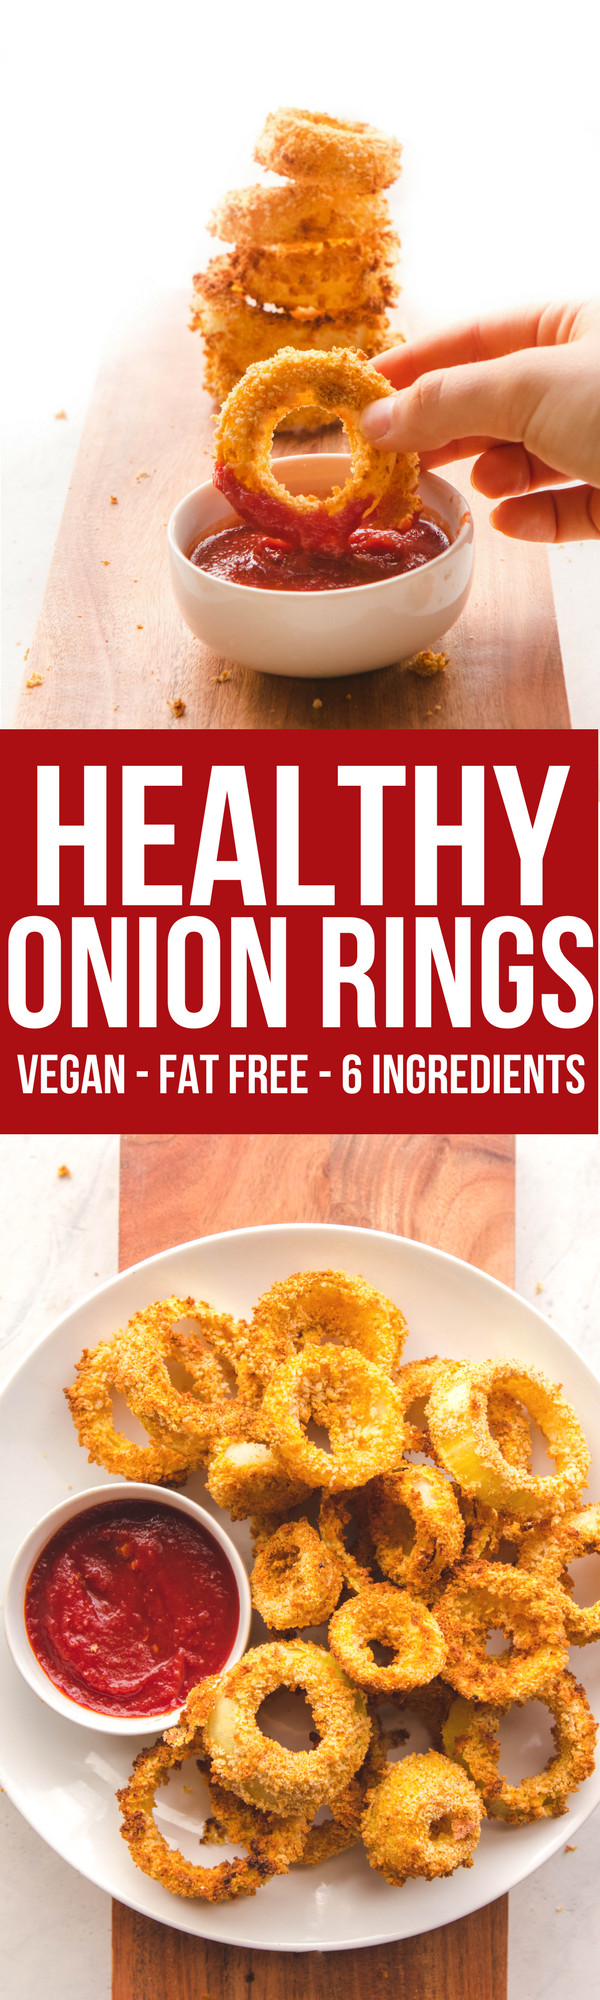 Vegan Onion Rings
 Healthy Vegan ion Rings Fat Free From My Bowl